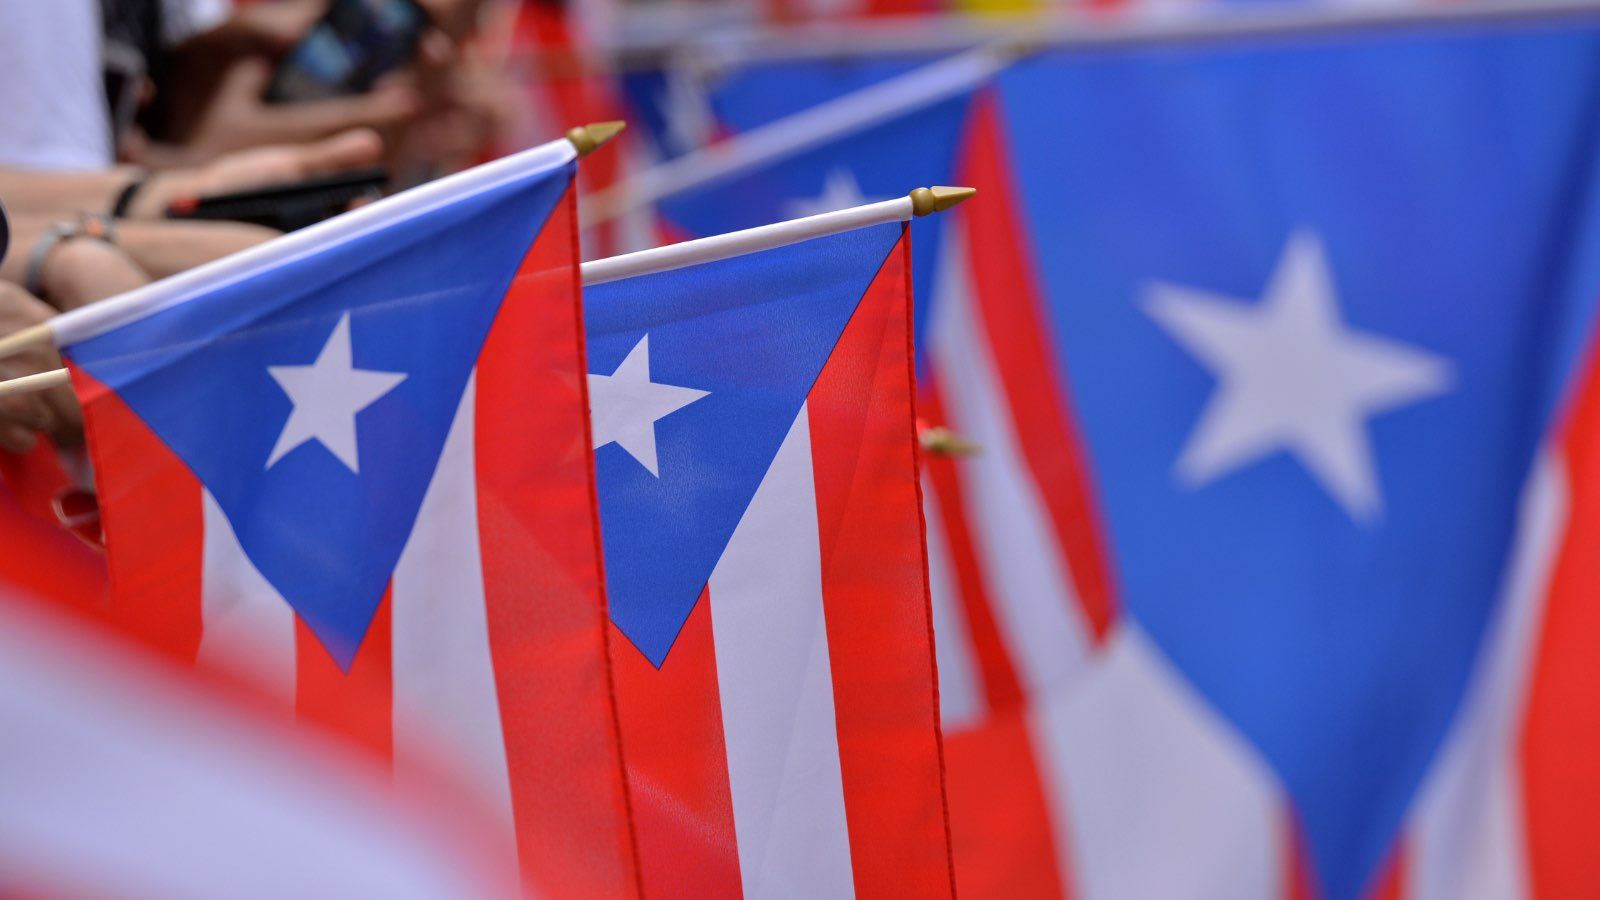 Puerto Rican Flags